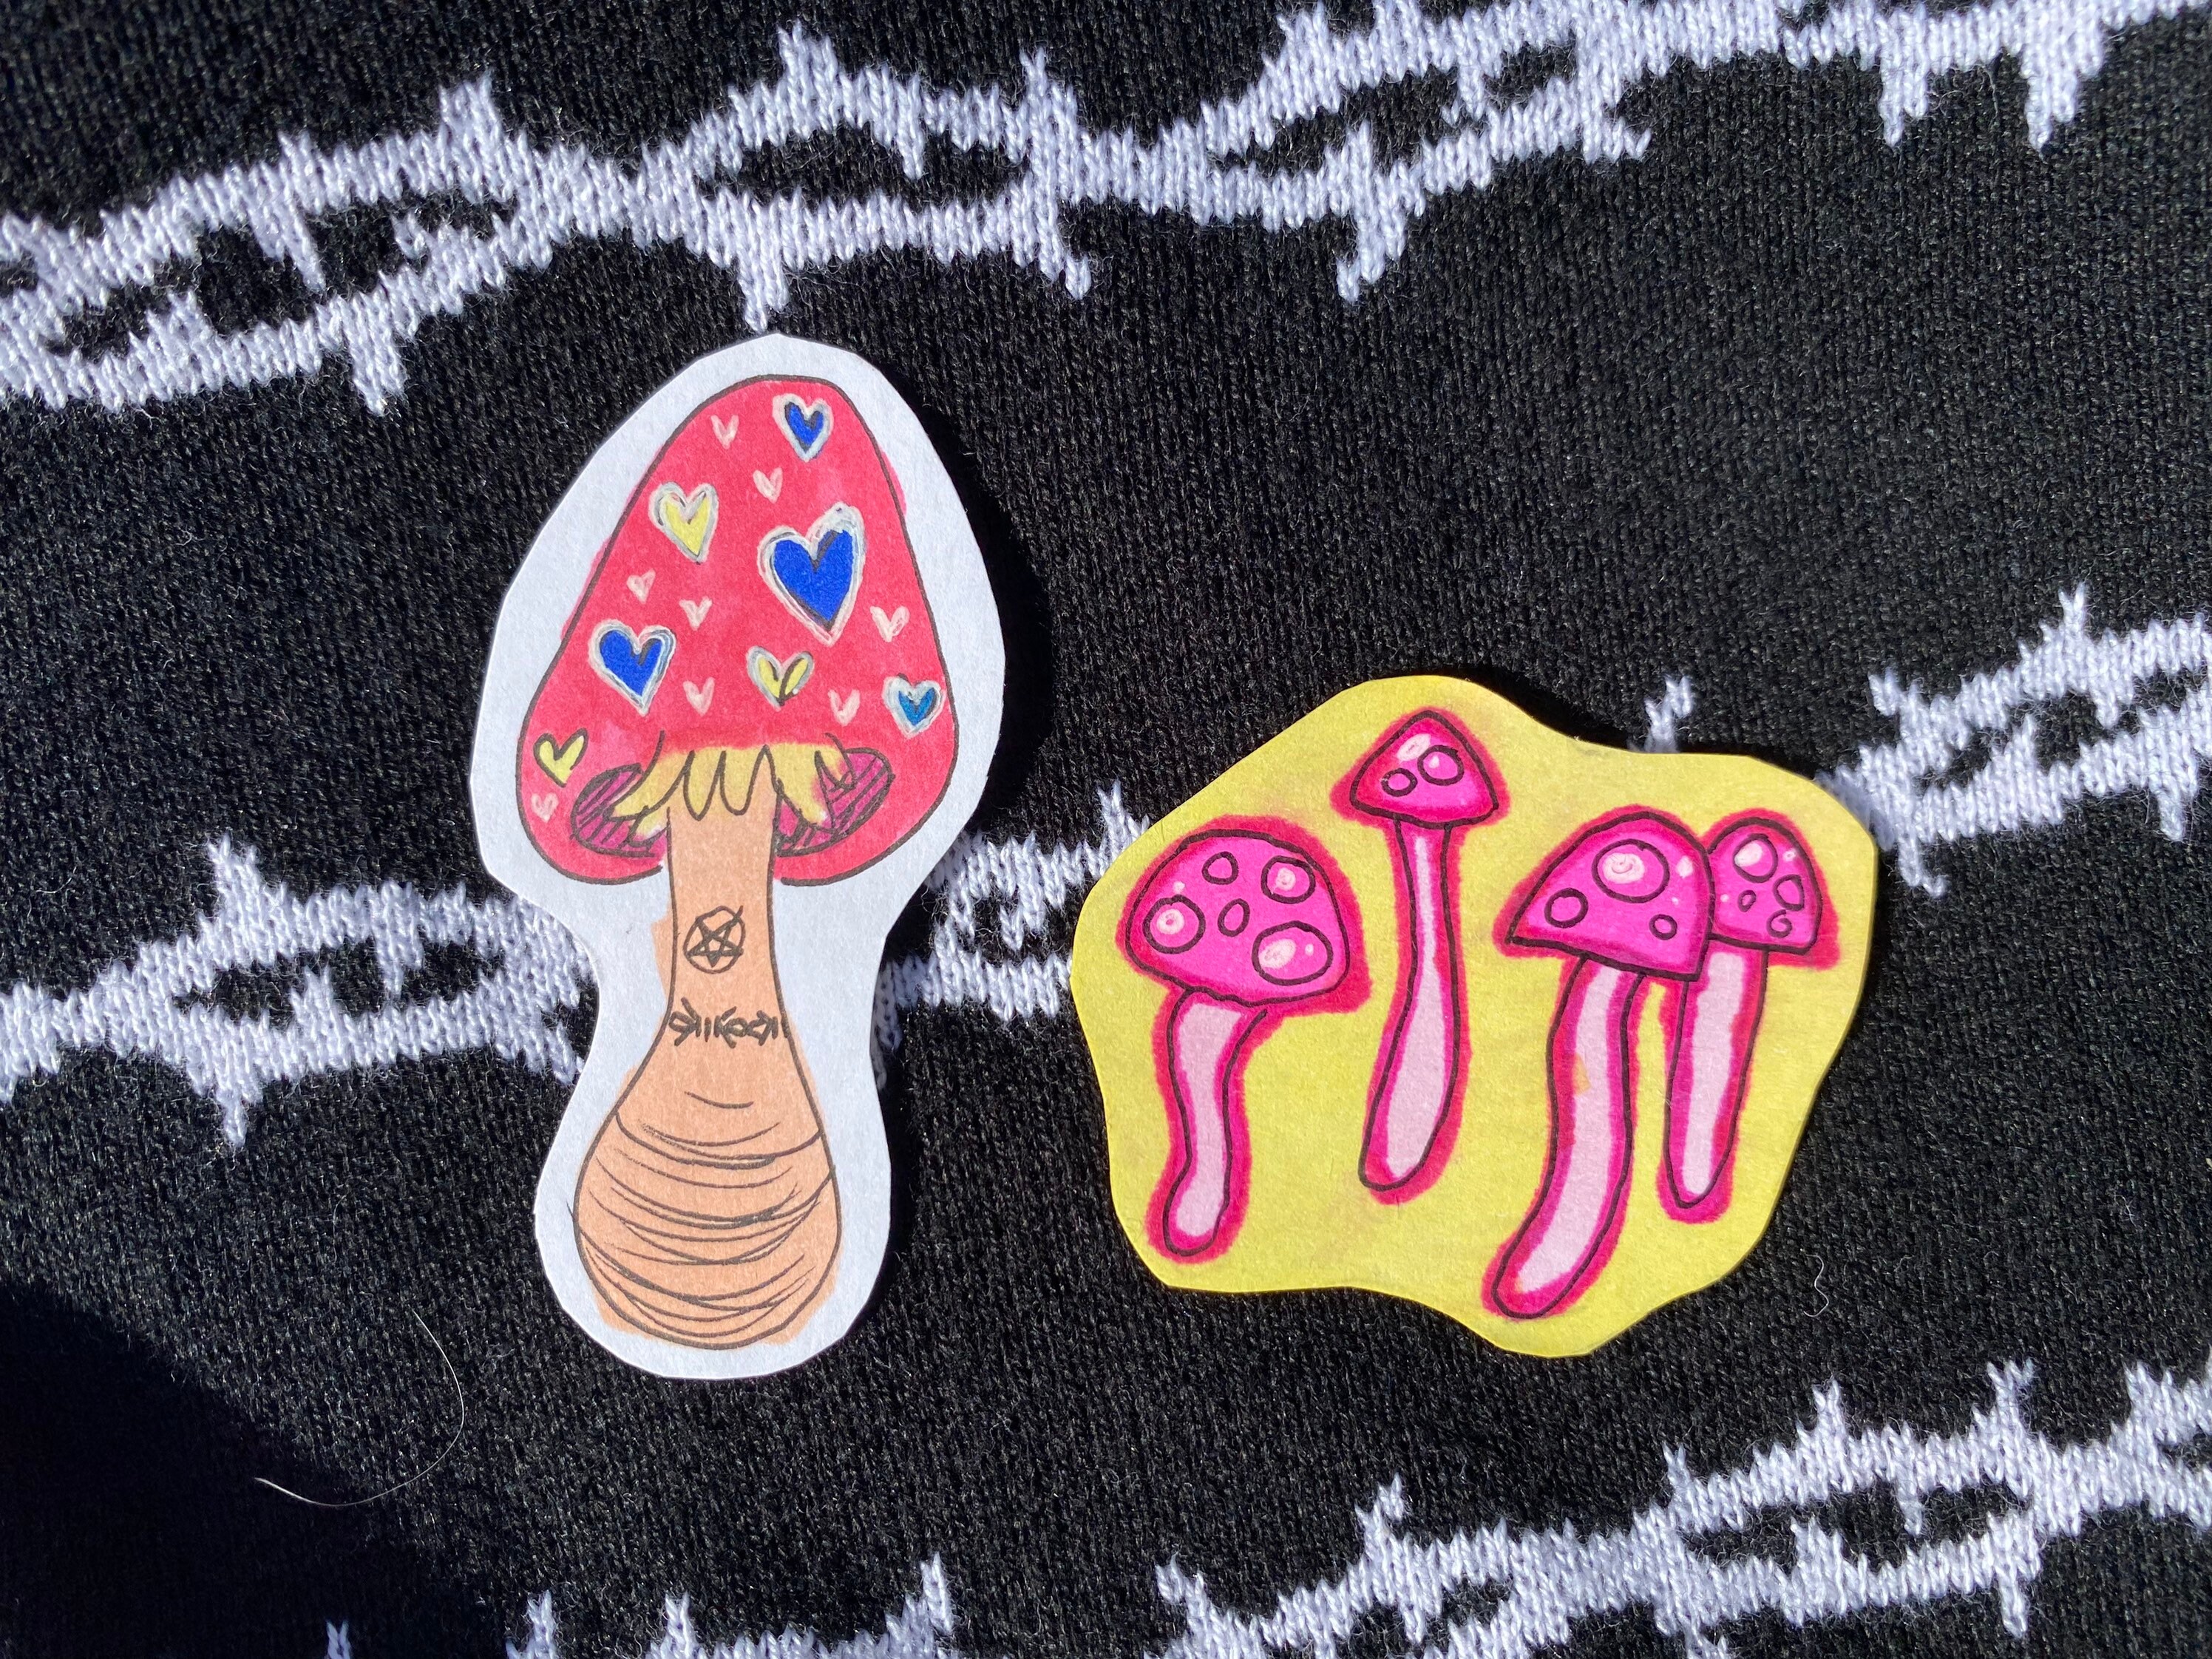 Details about   Decorative Paintings Graffiti Mushroom Stickers Cartoon Label Paper Sticker